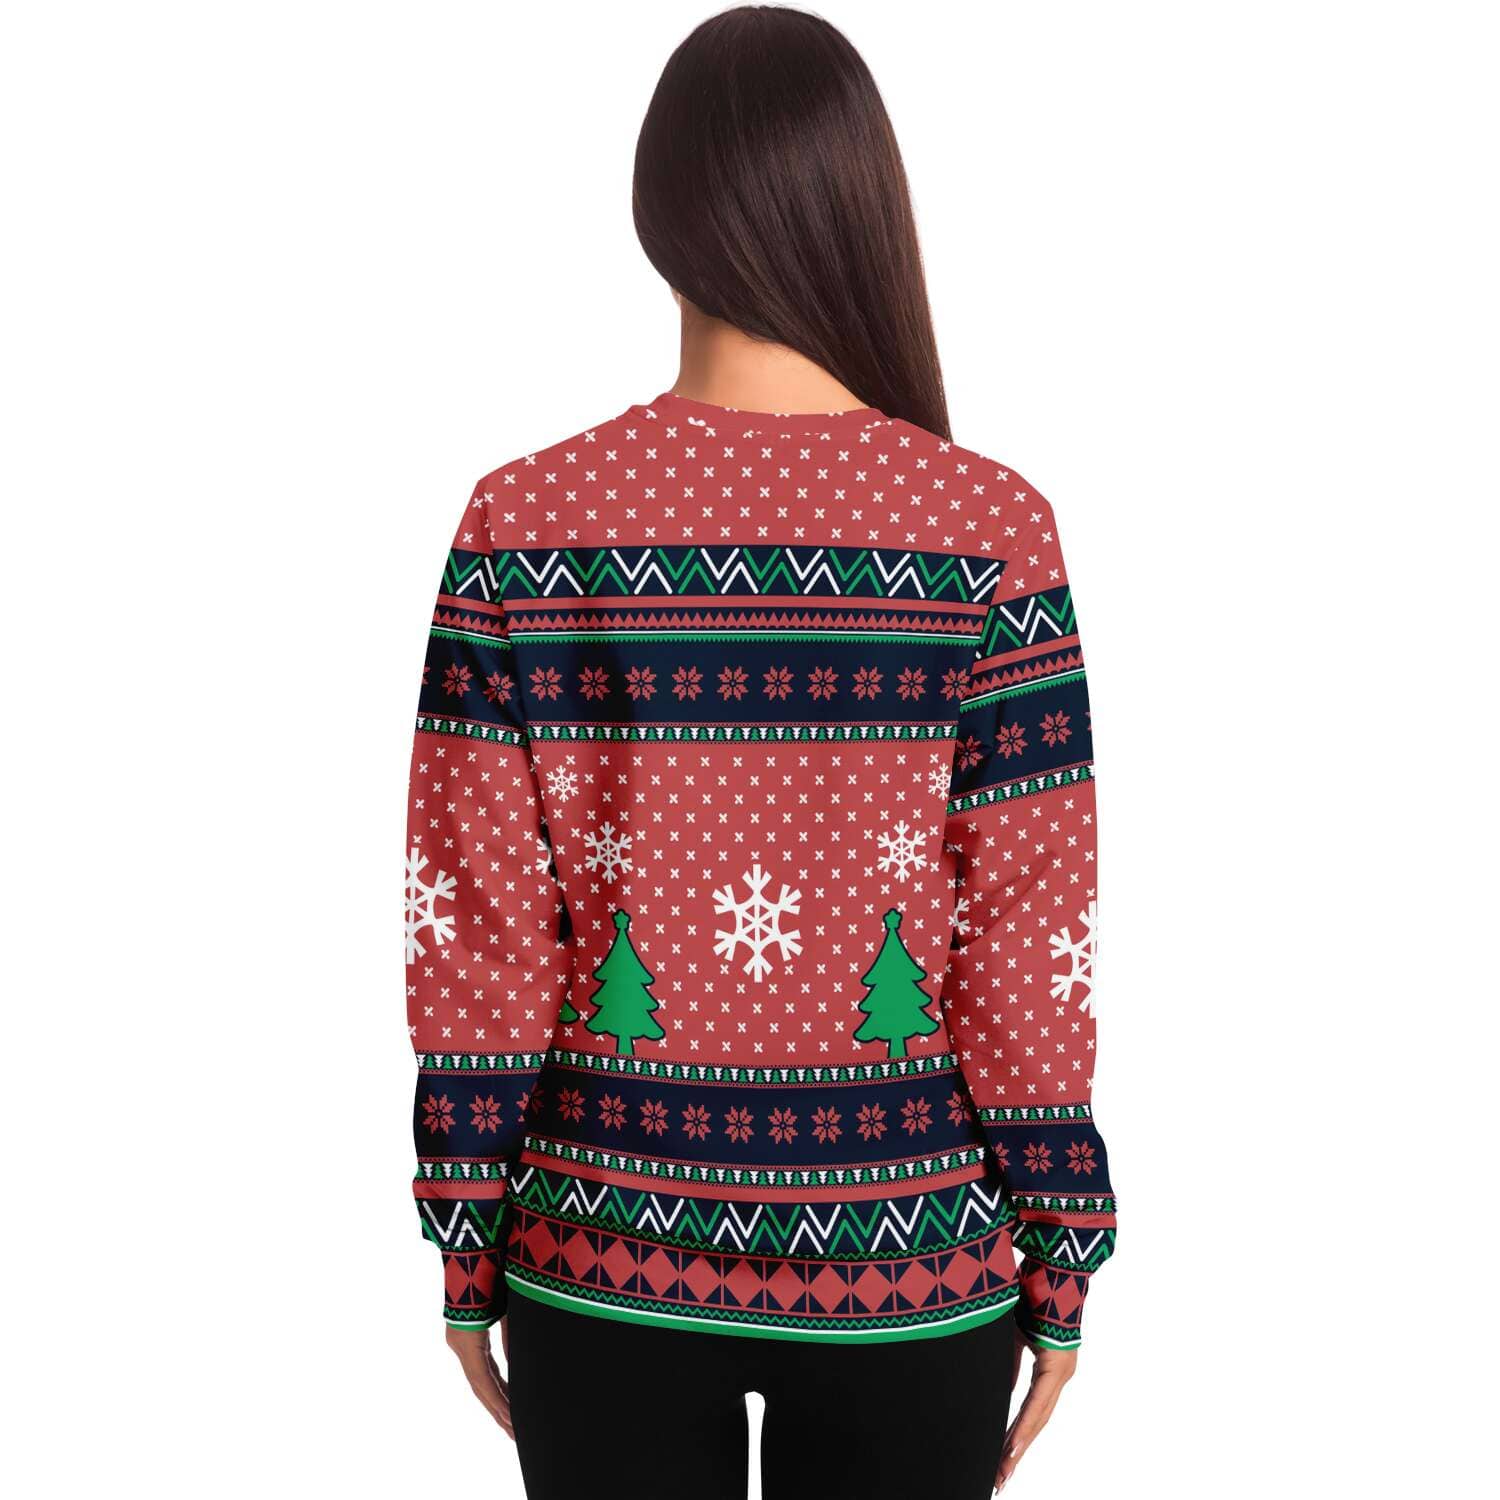 SUBLIMINATOR Holiday Spirit Ugly Christmas Sweaters Sweatshirt